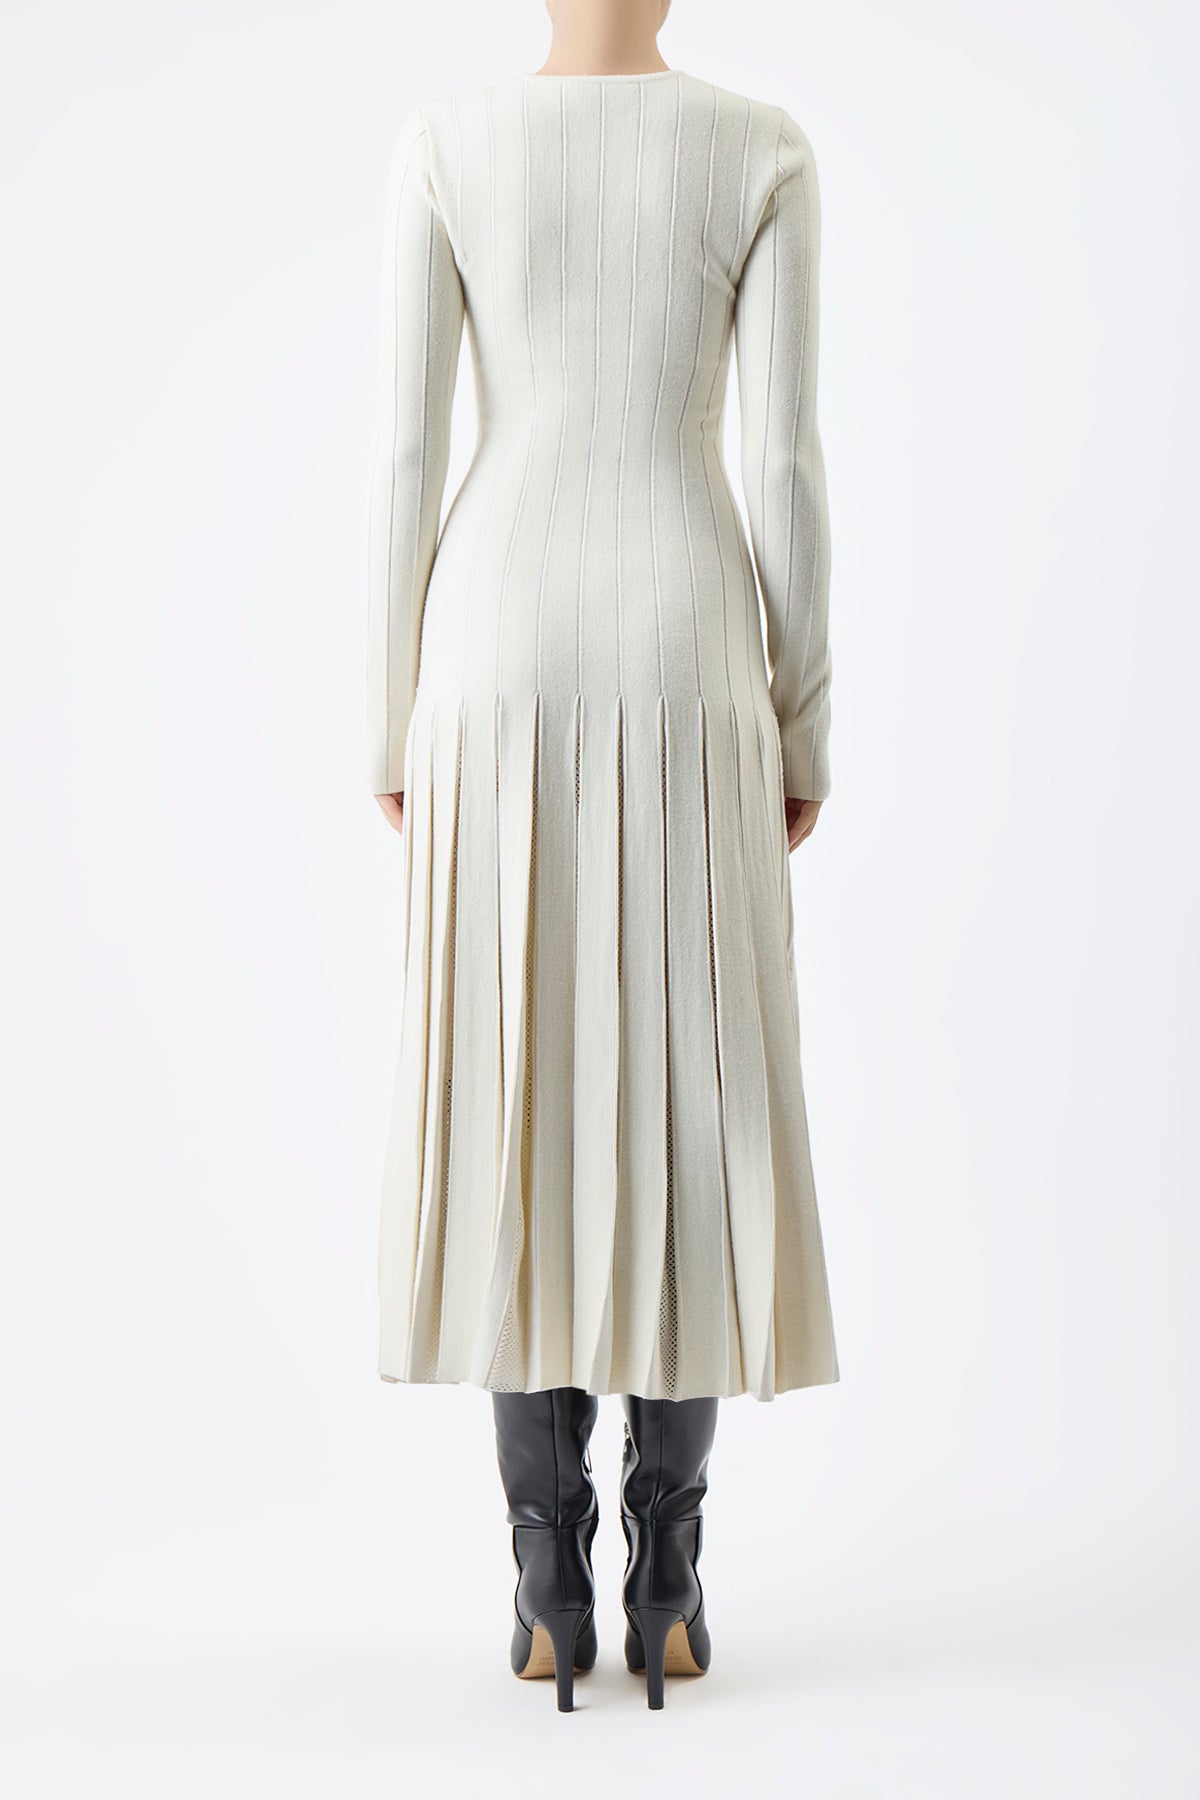 Walsh Knit Pleated Dress in Ivory Wool